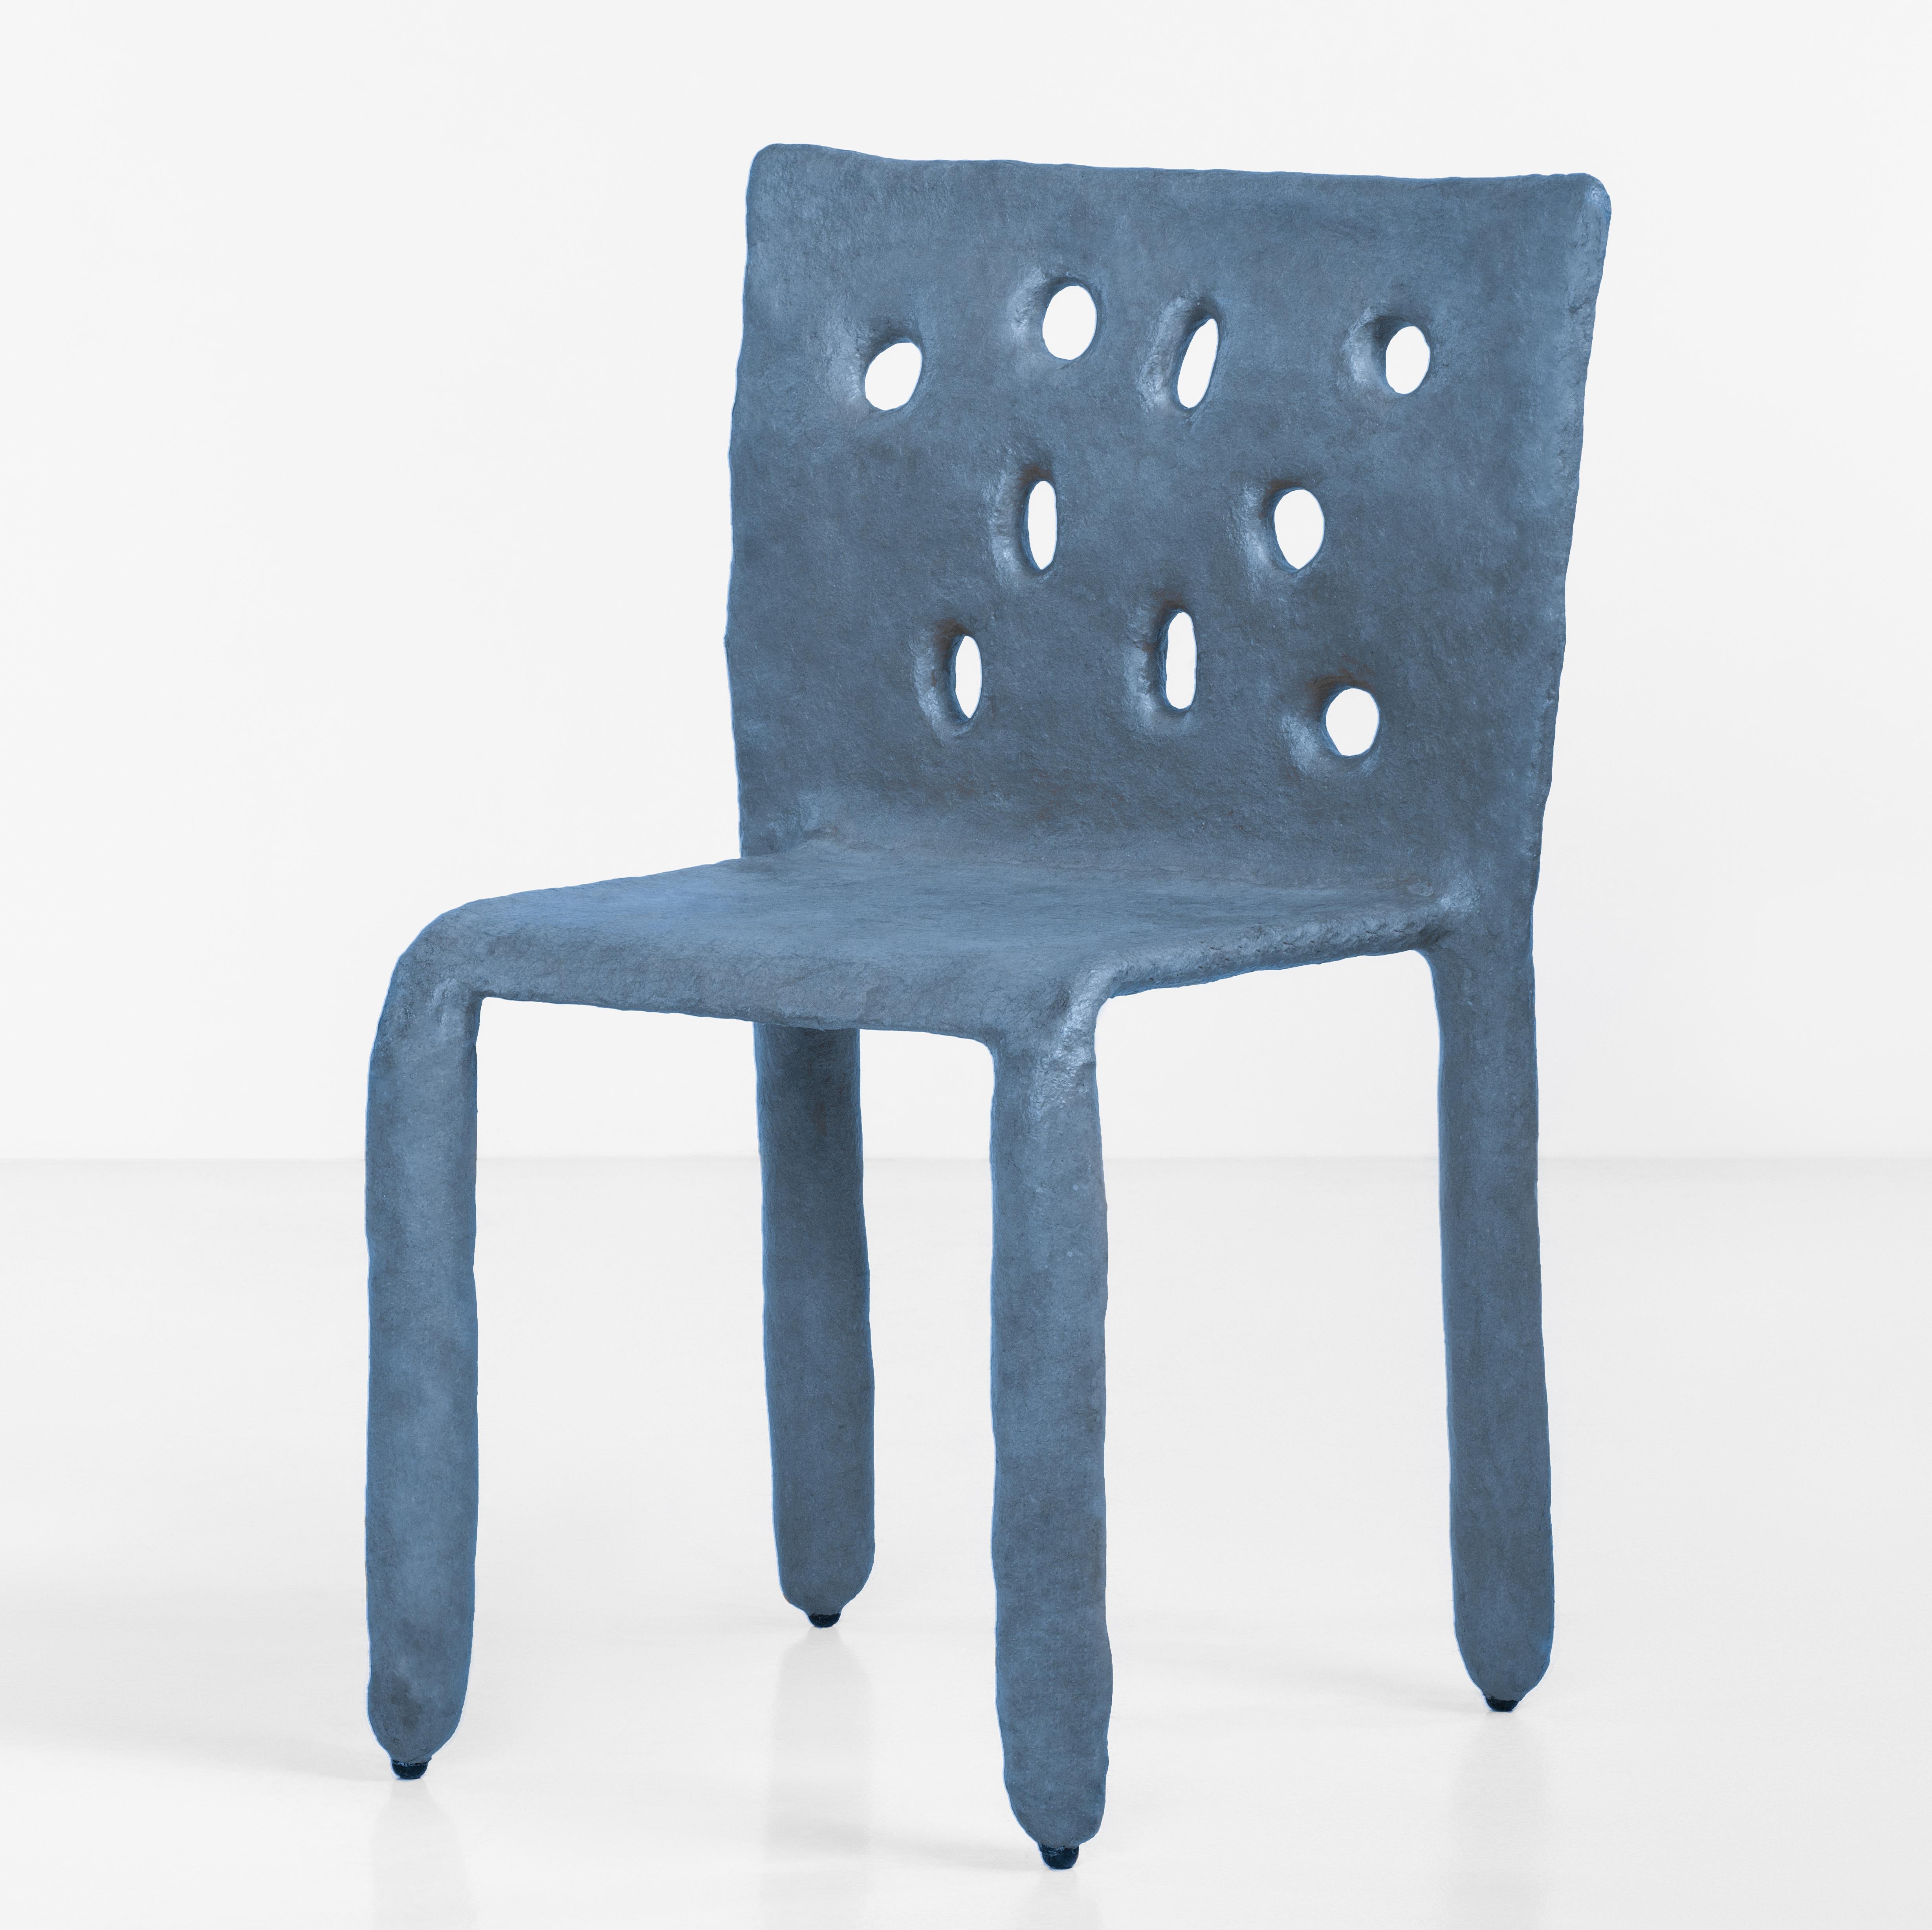 White Sculpted Contemporary Chair by FAINA 7